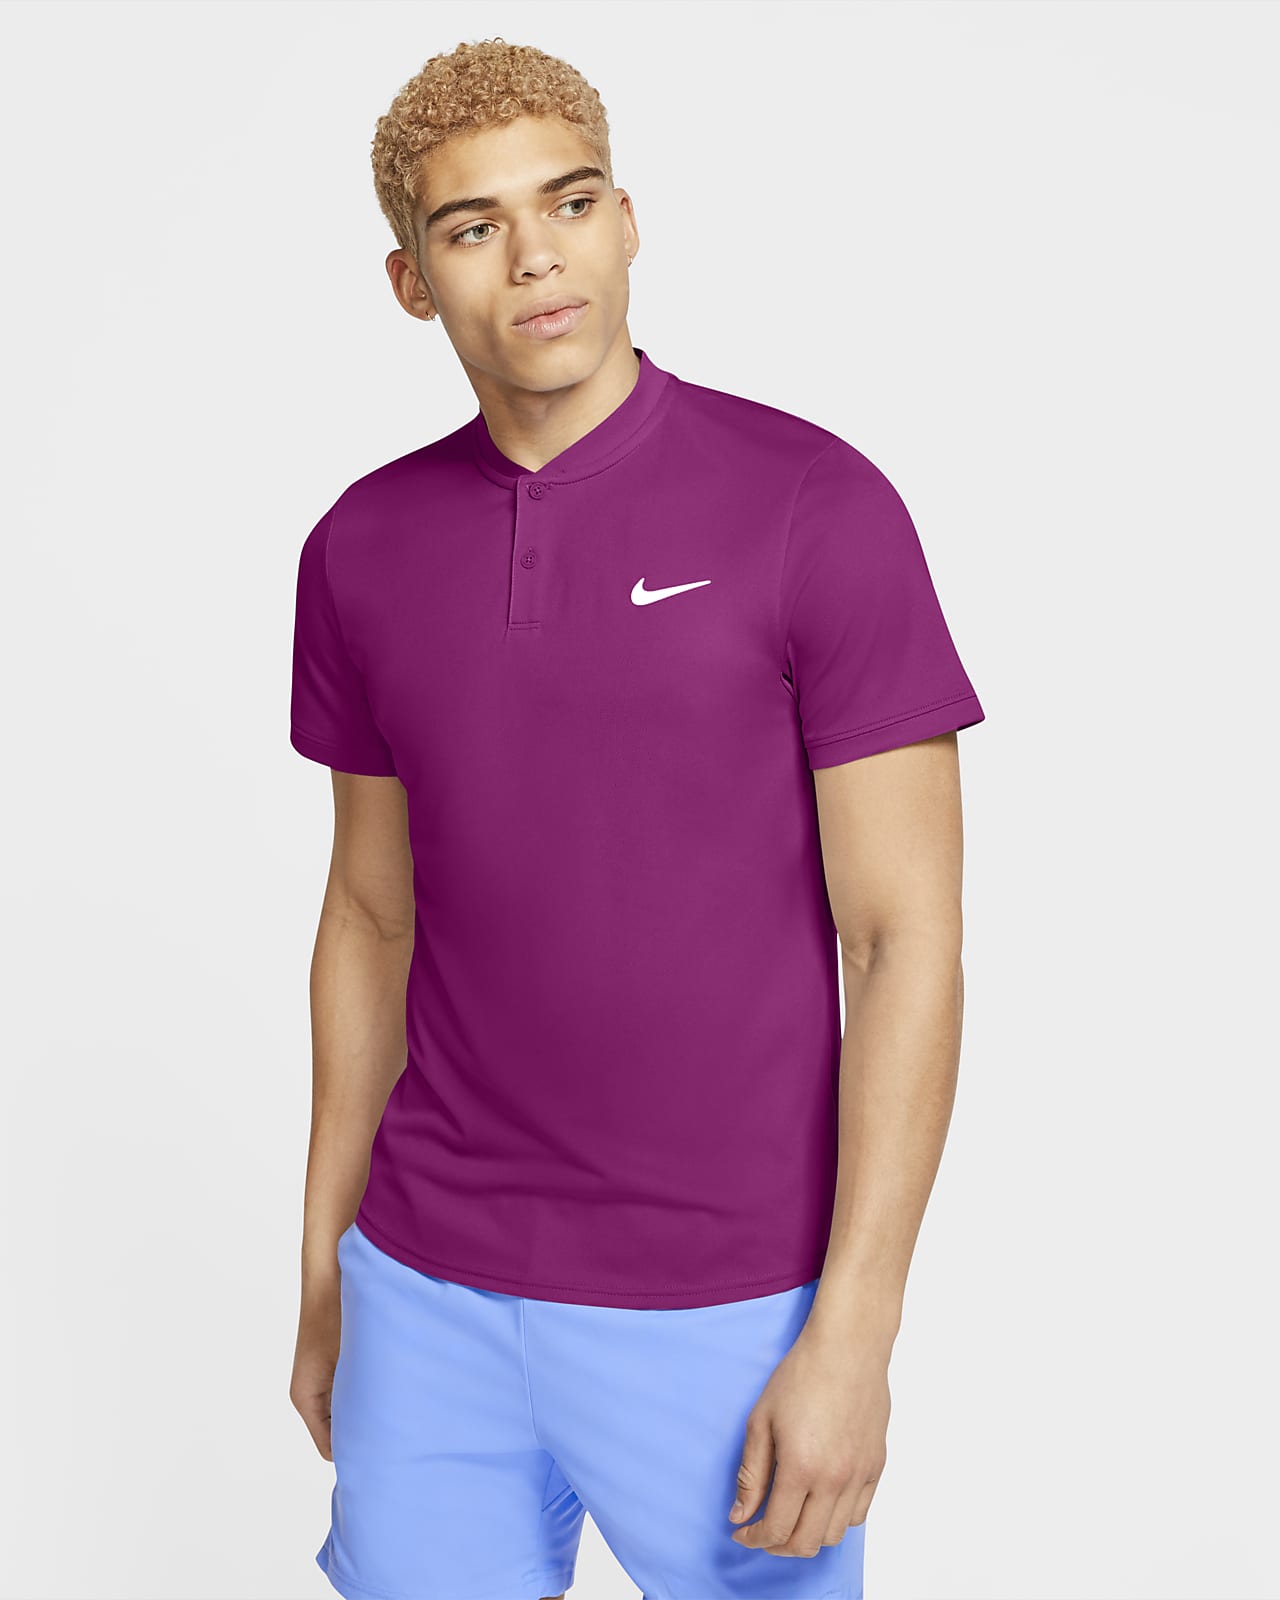 purple nike tennis